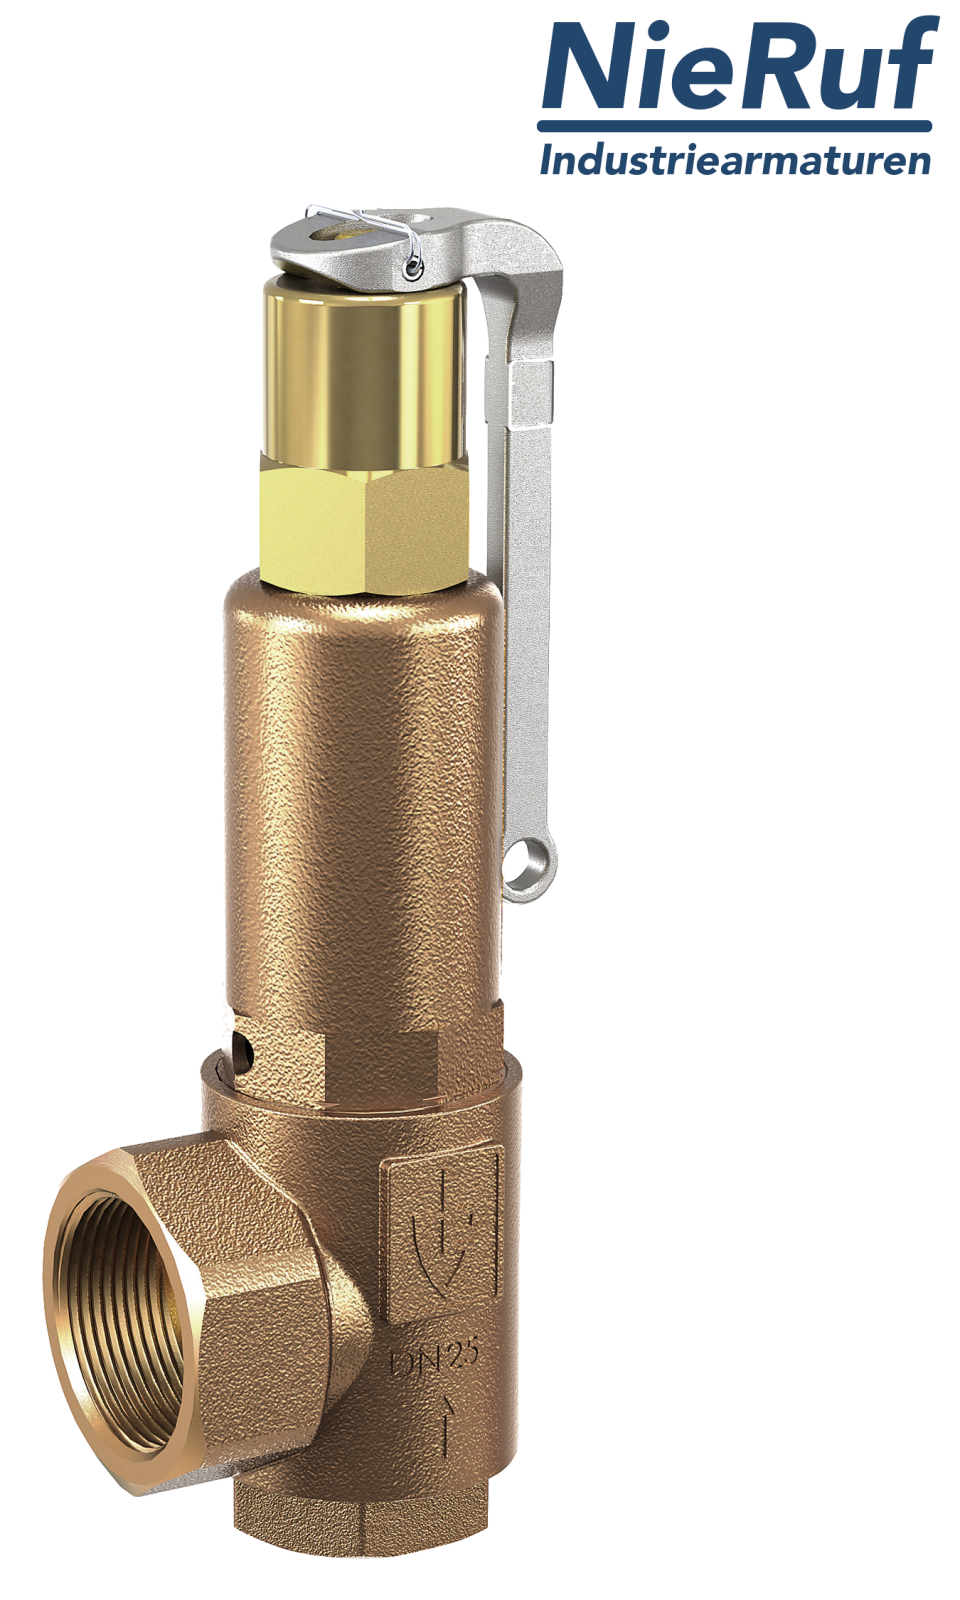 safety valve 1 1/4" x 2" fm SV07 neutral gaseous media, gunmetal EPDM, with lever